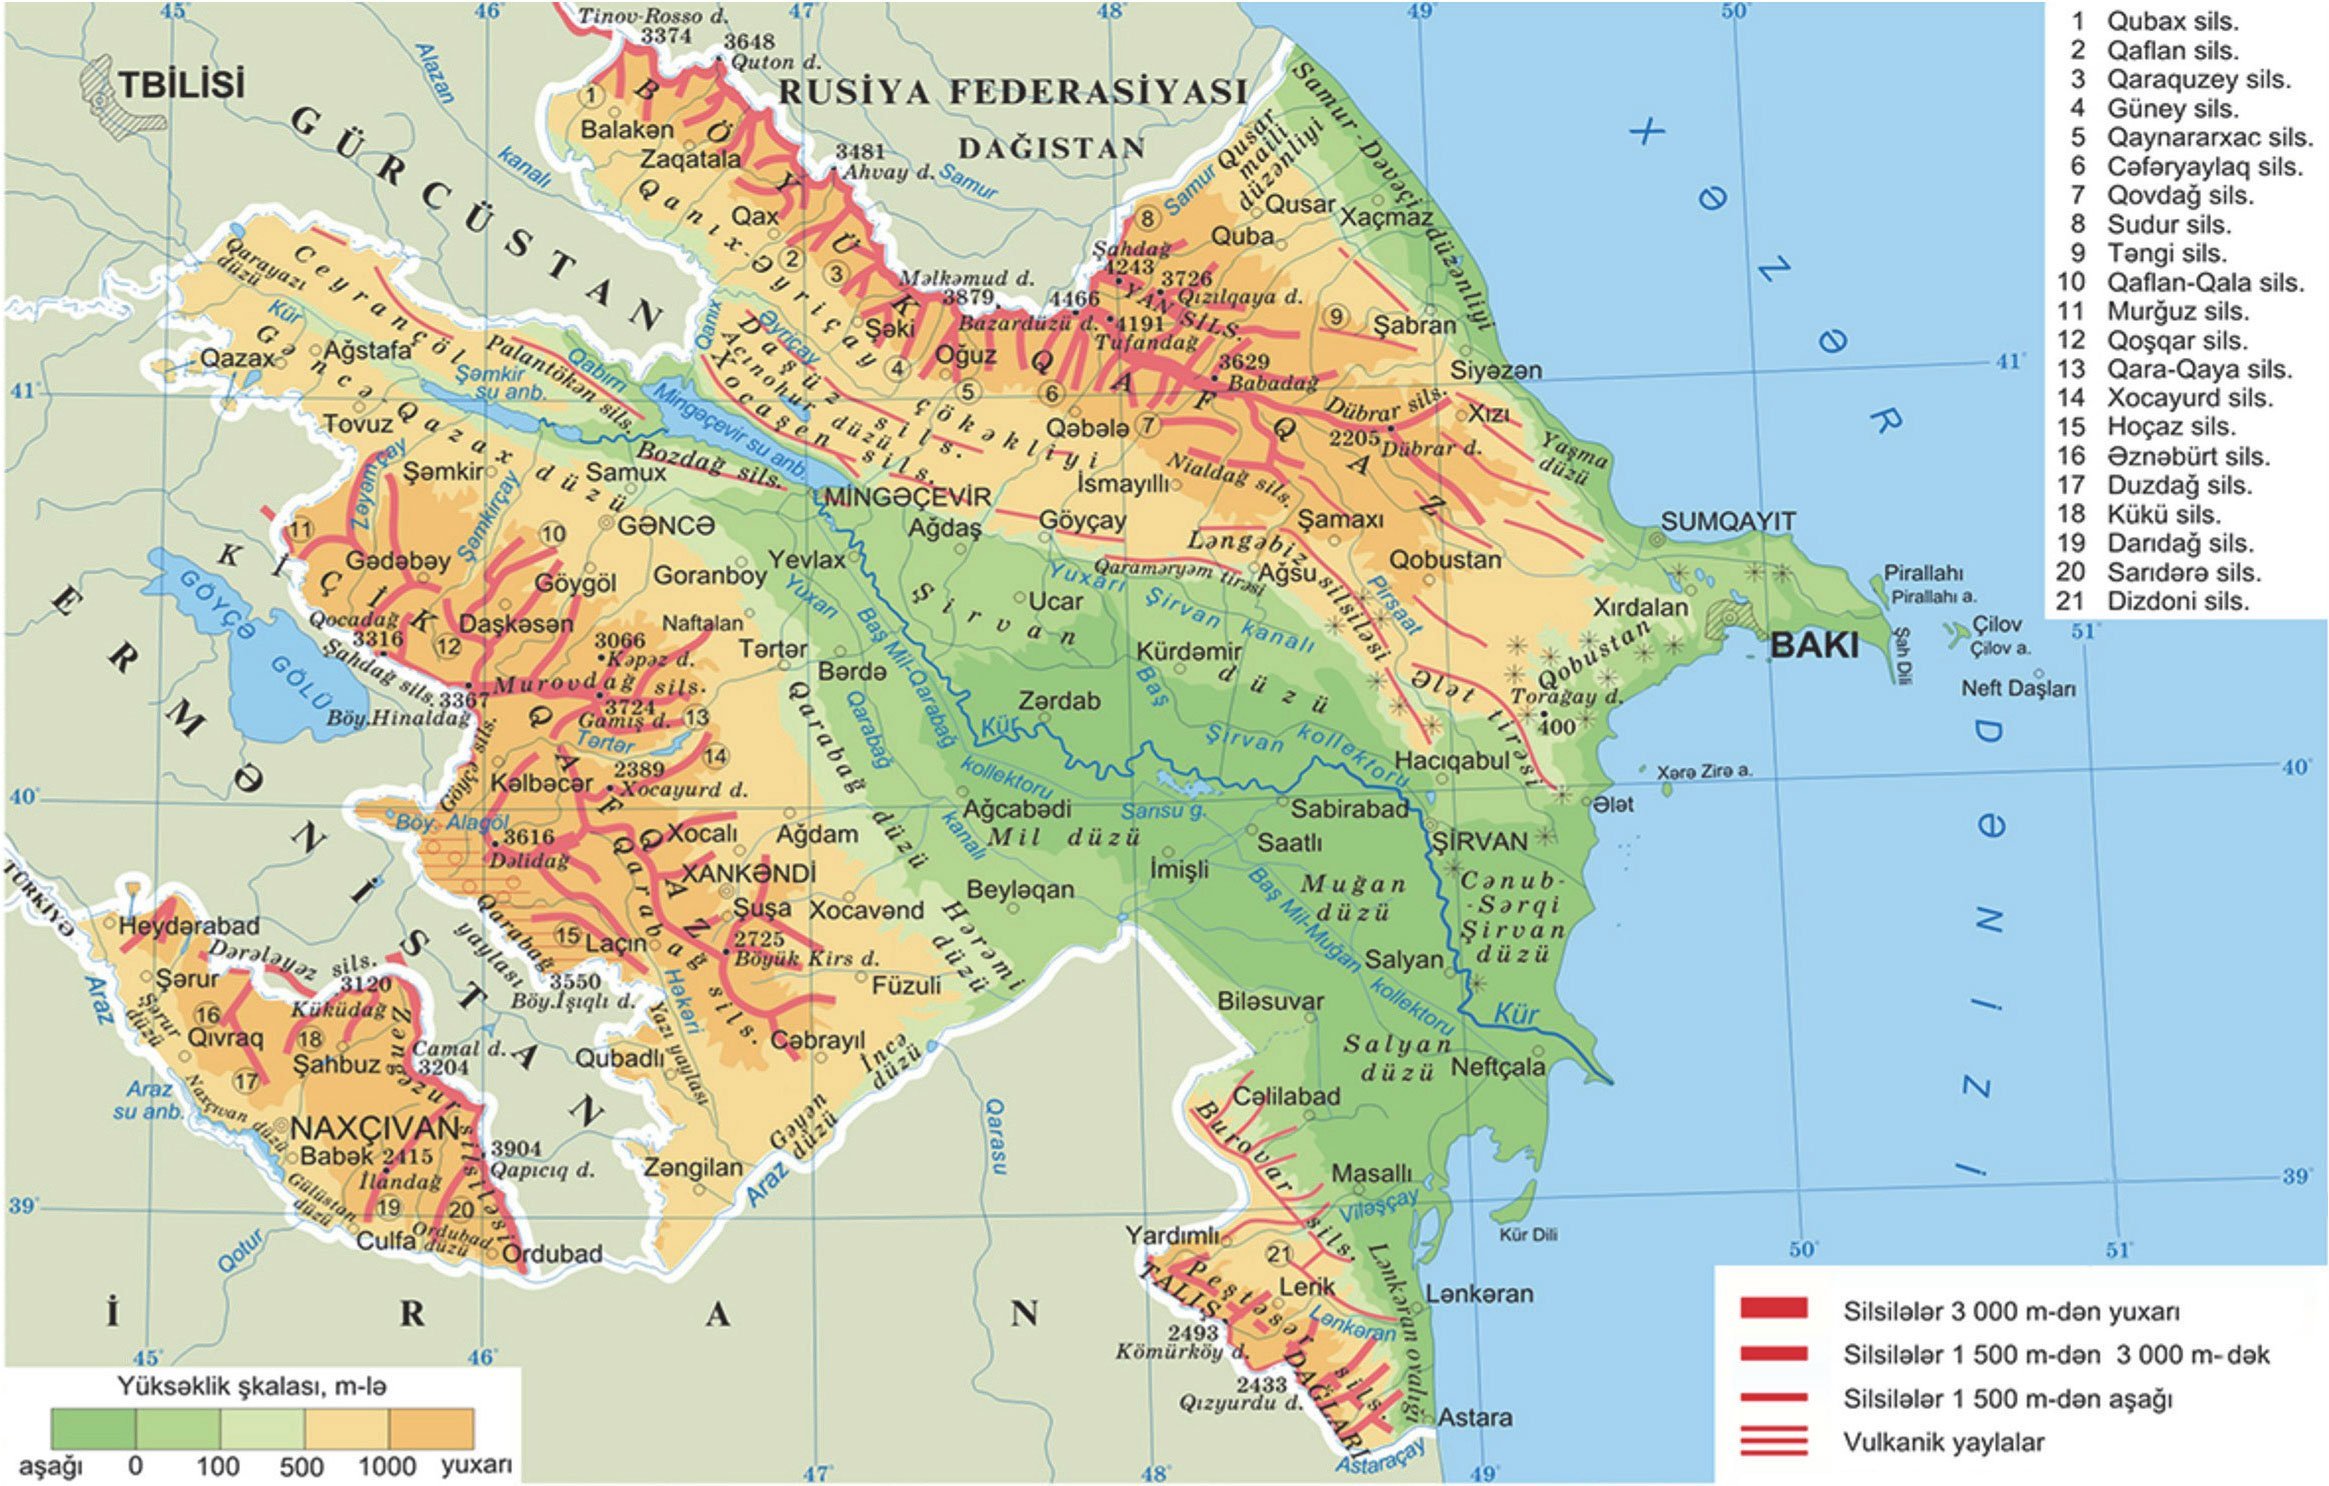 План азербайджан